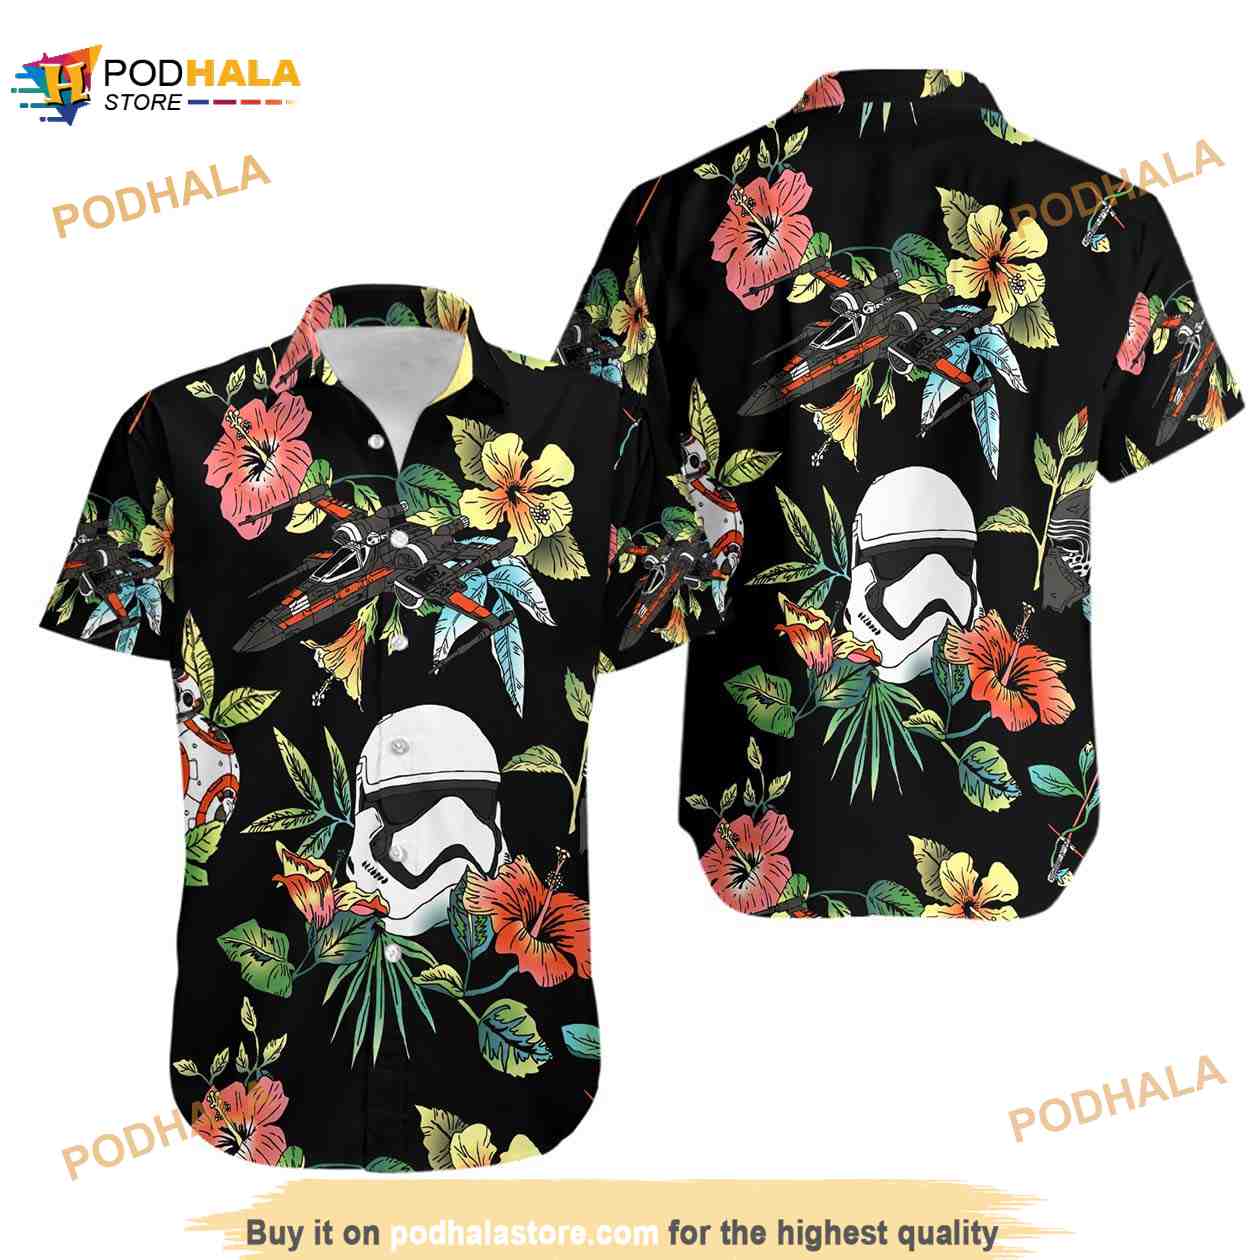 Star Wars Darth Vader Pirates Hawaiian Shirt - Trendy Aloha